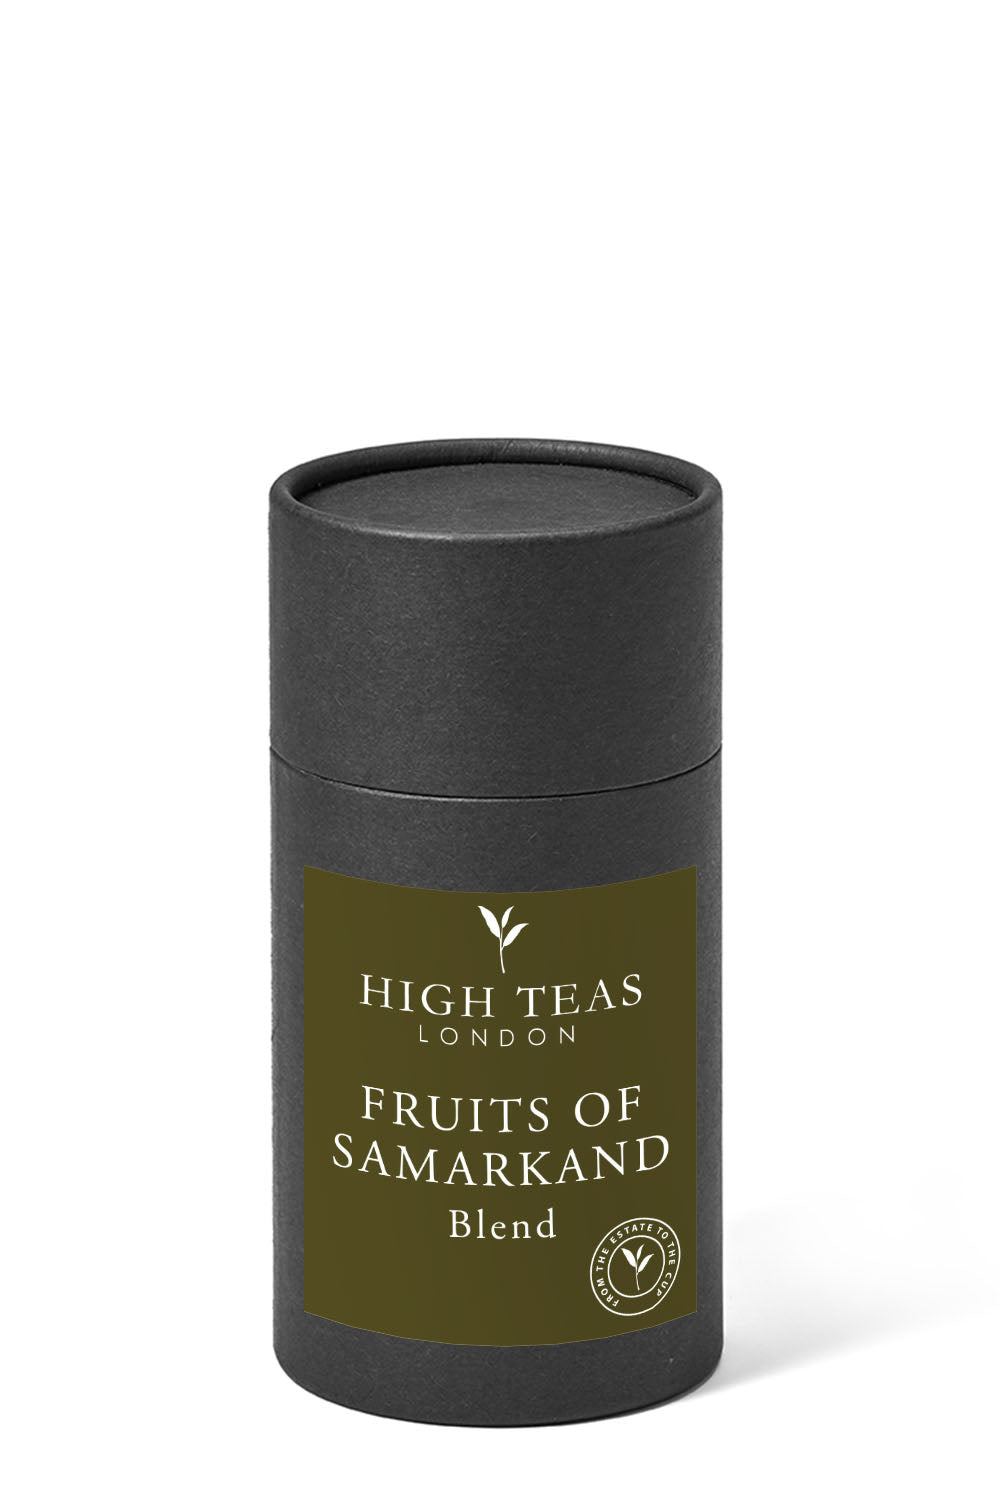 Fruits of Samarkand-60g gift-Loose Leaf Tea-High Teas